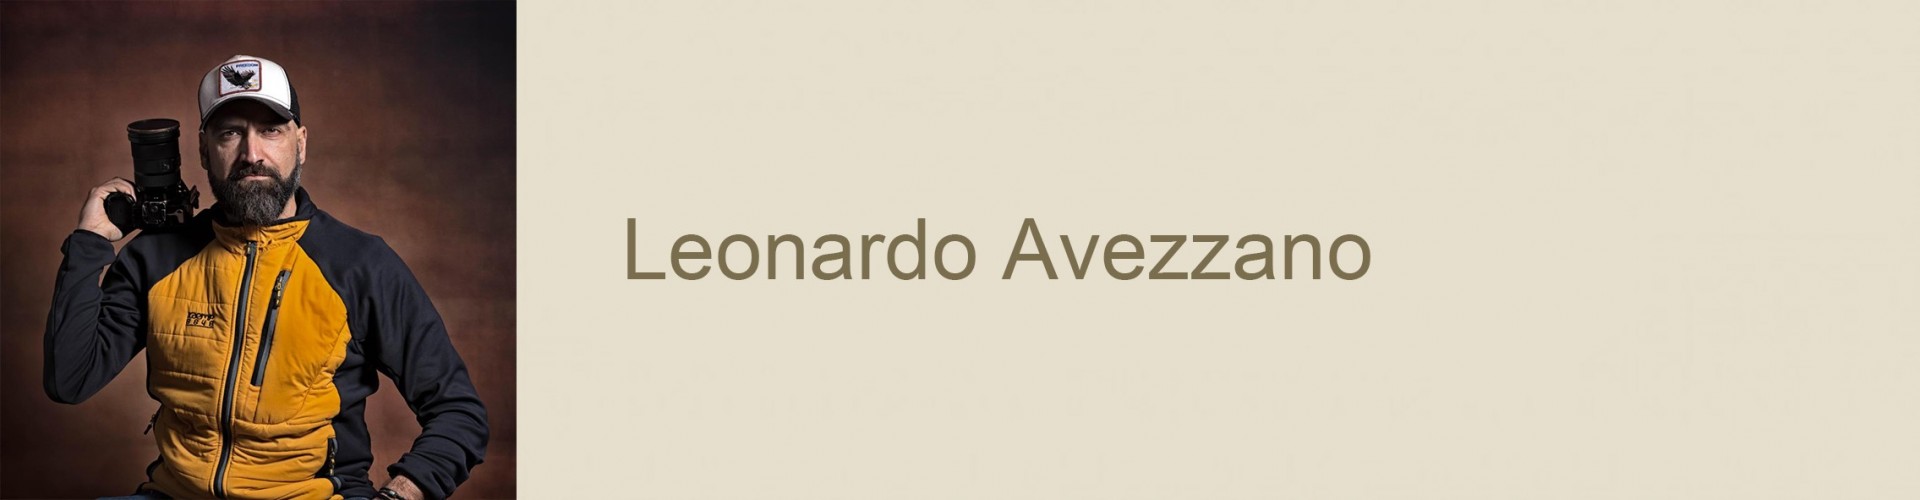 Leonardo Avezzano